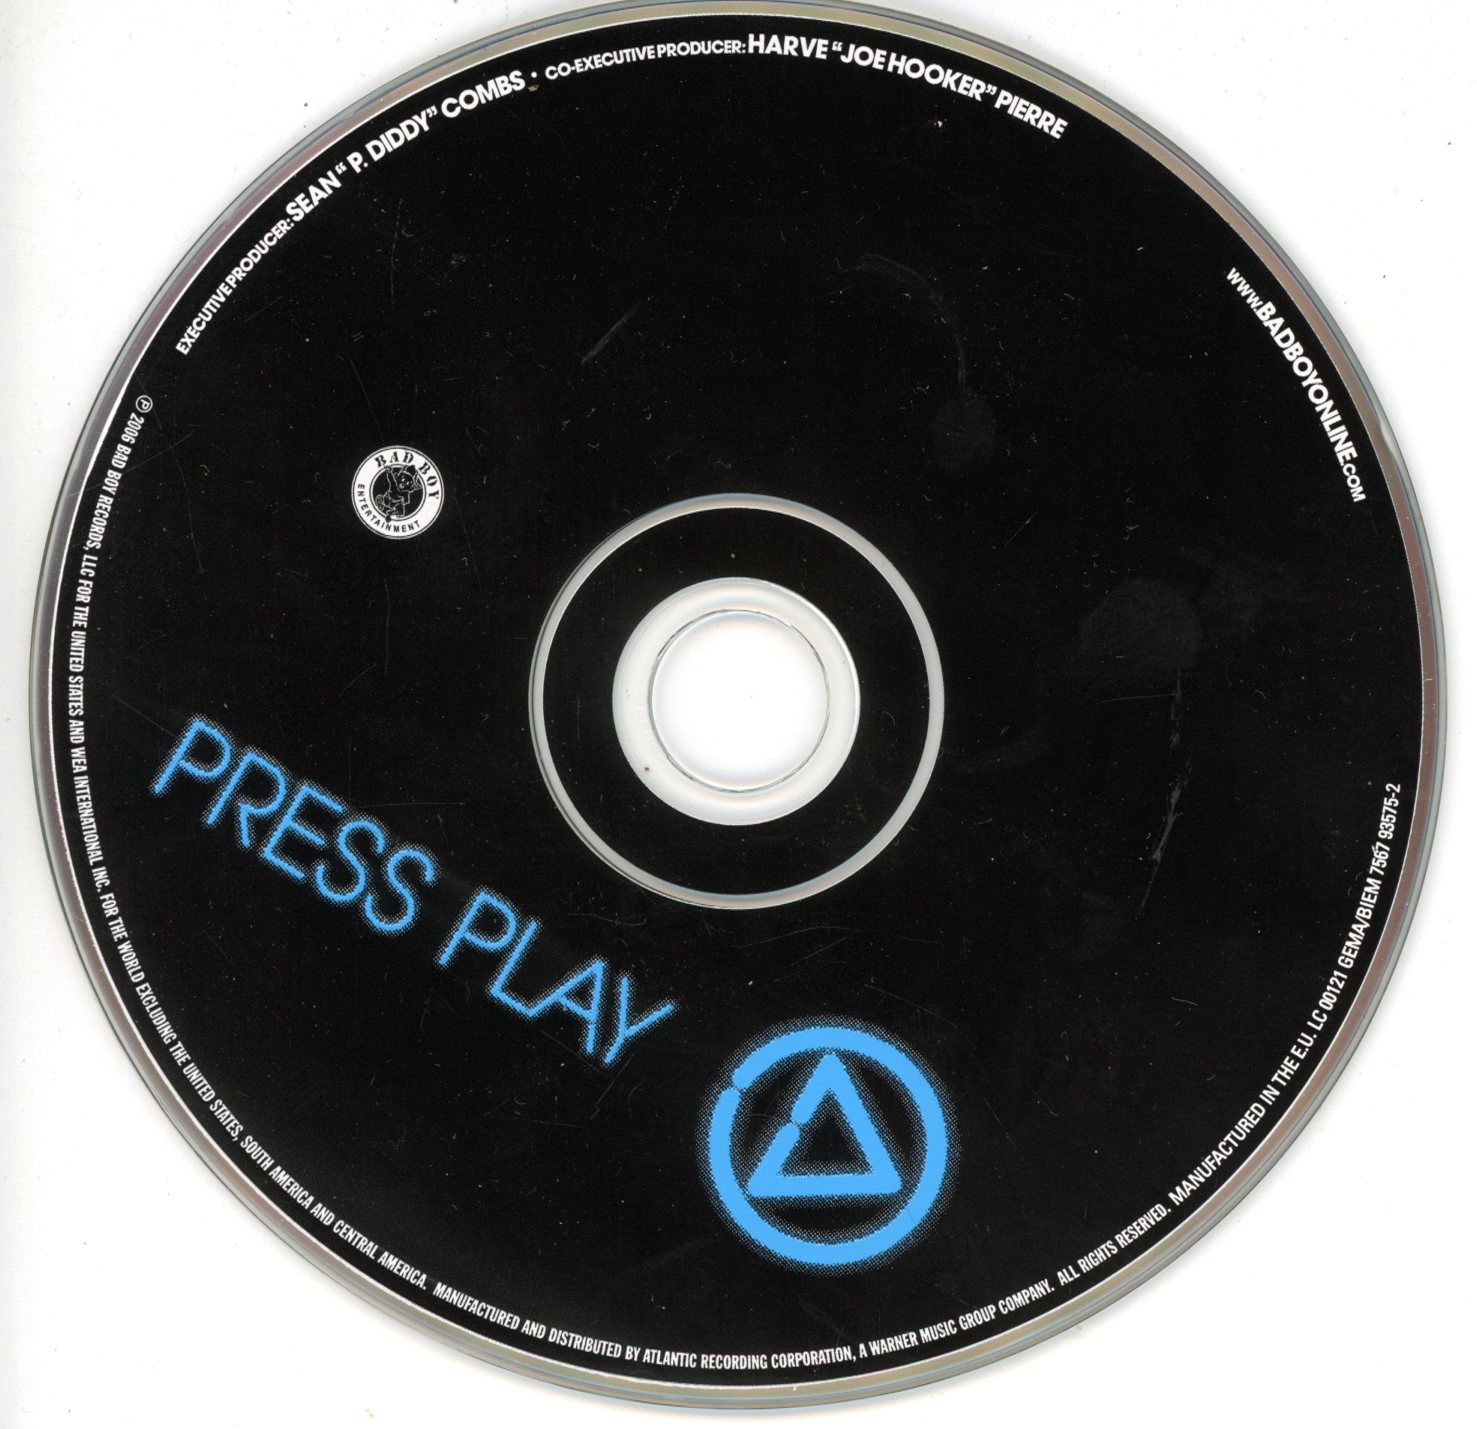 Diddy press play album sales - frogdarelo